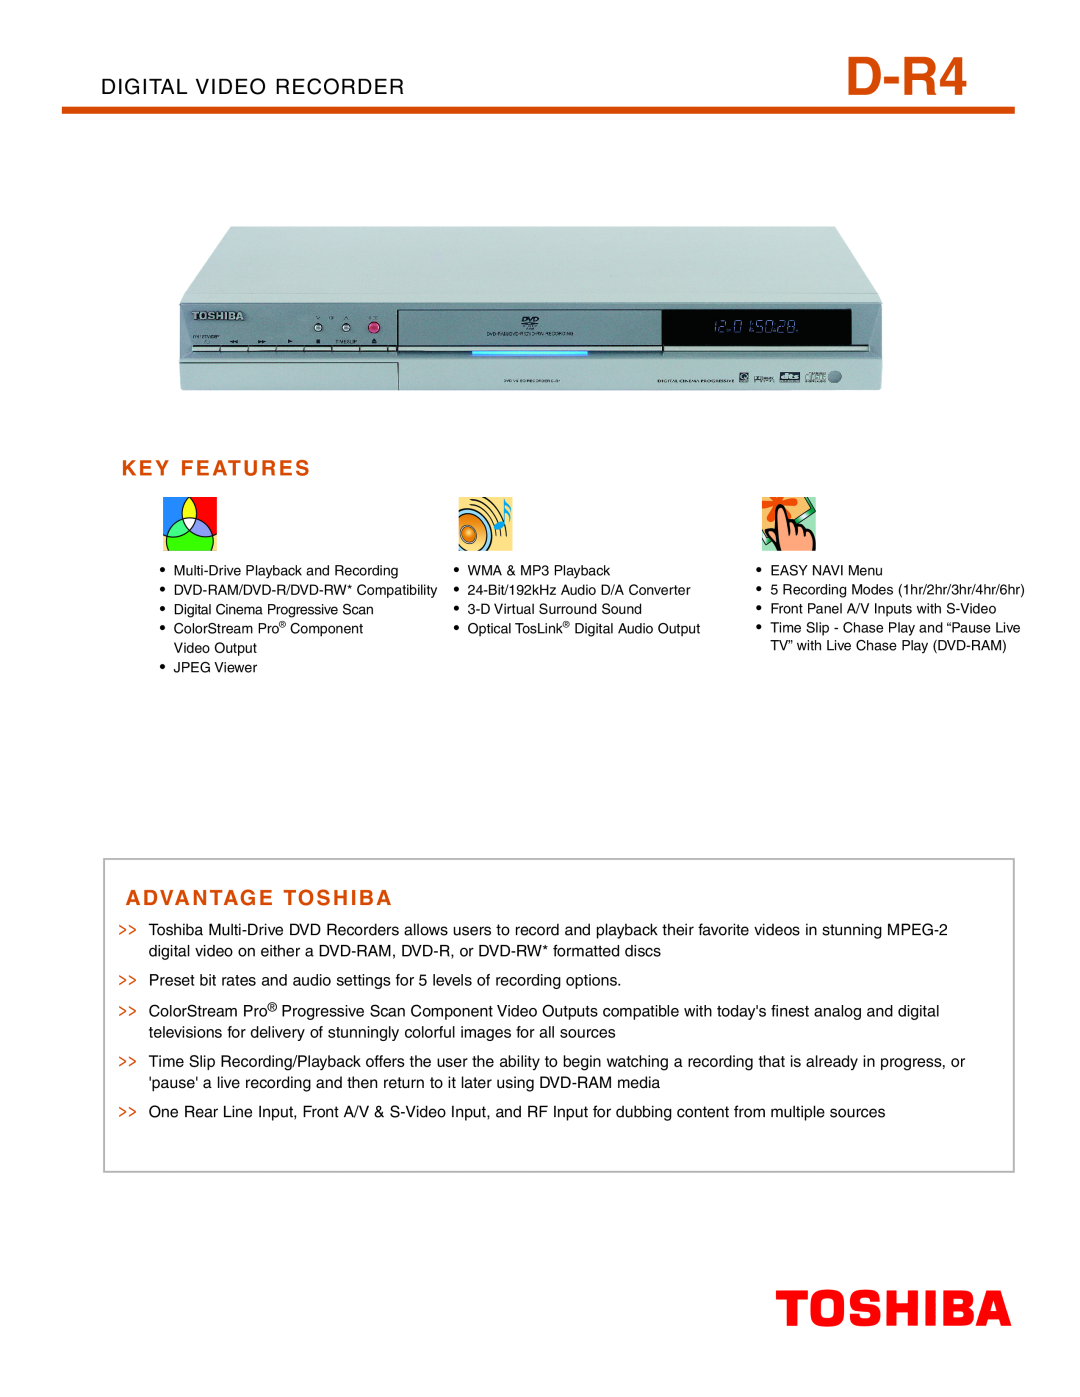 Toshiba D-R4 manual Key Features, Advantage Toshiba, Digital Video Recorder 